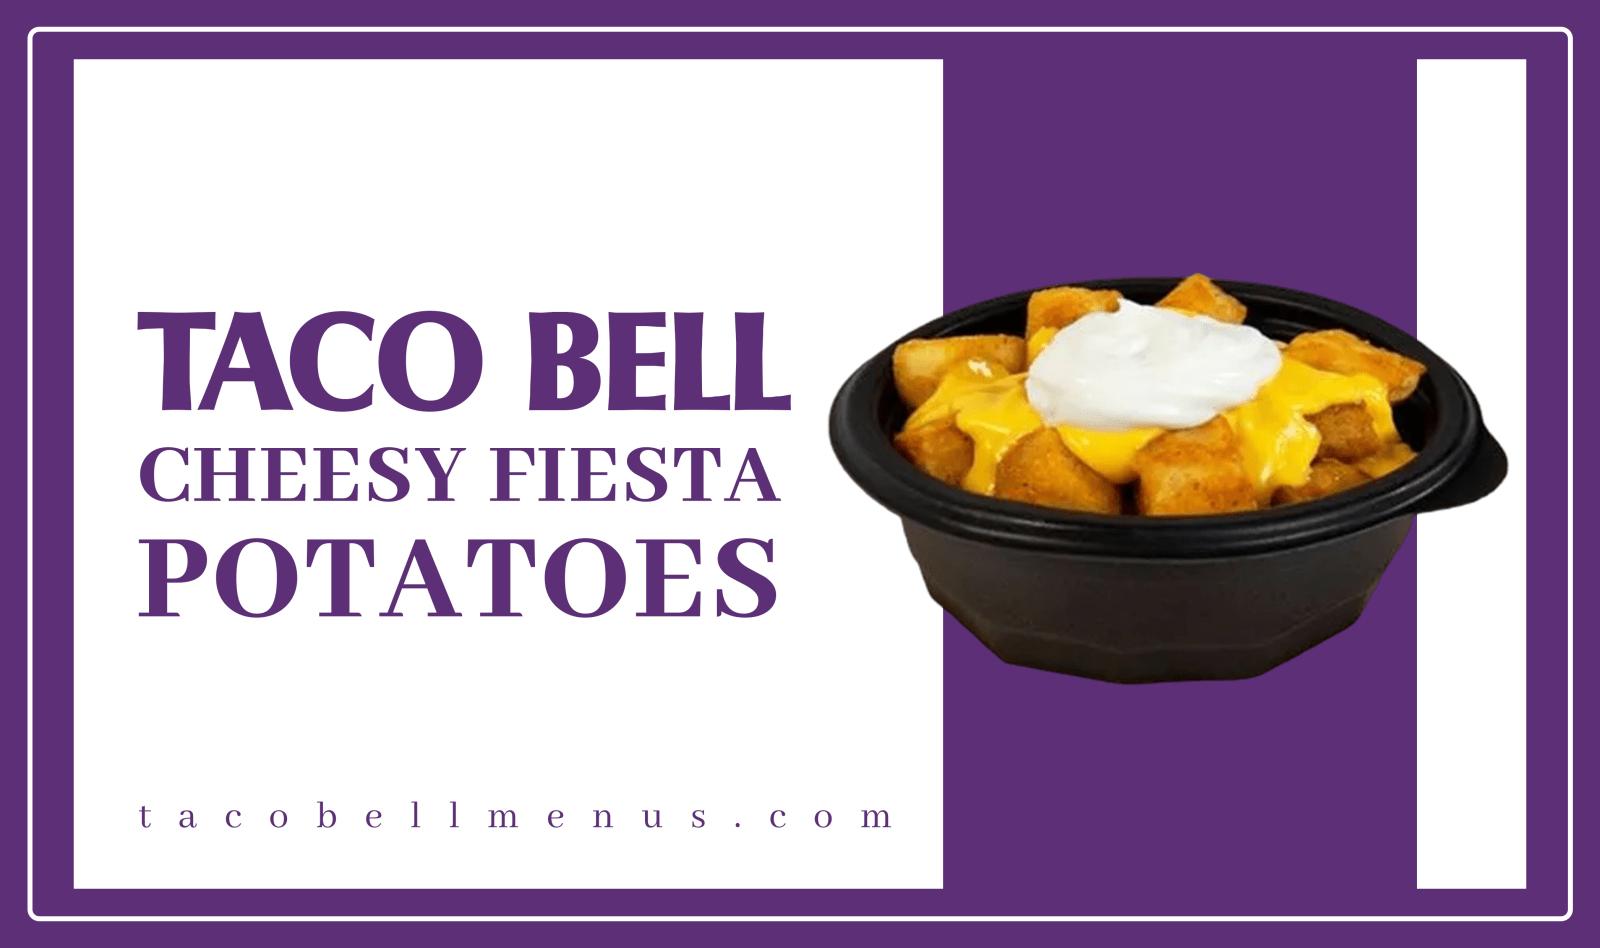 Cheesy Fiesta Potatoes Taco Bell, taco bell potato menu, fiesta potatoes taco bell price, Cheesy Fiesta Potatoes Taco Bell Nutritions, Cheesy Fiesta Potatoes Allergens, Cheesy Fiesta Potatoes Taco Bell Recipe